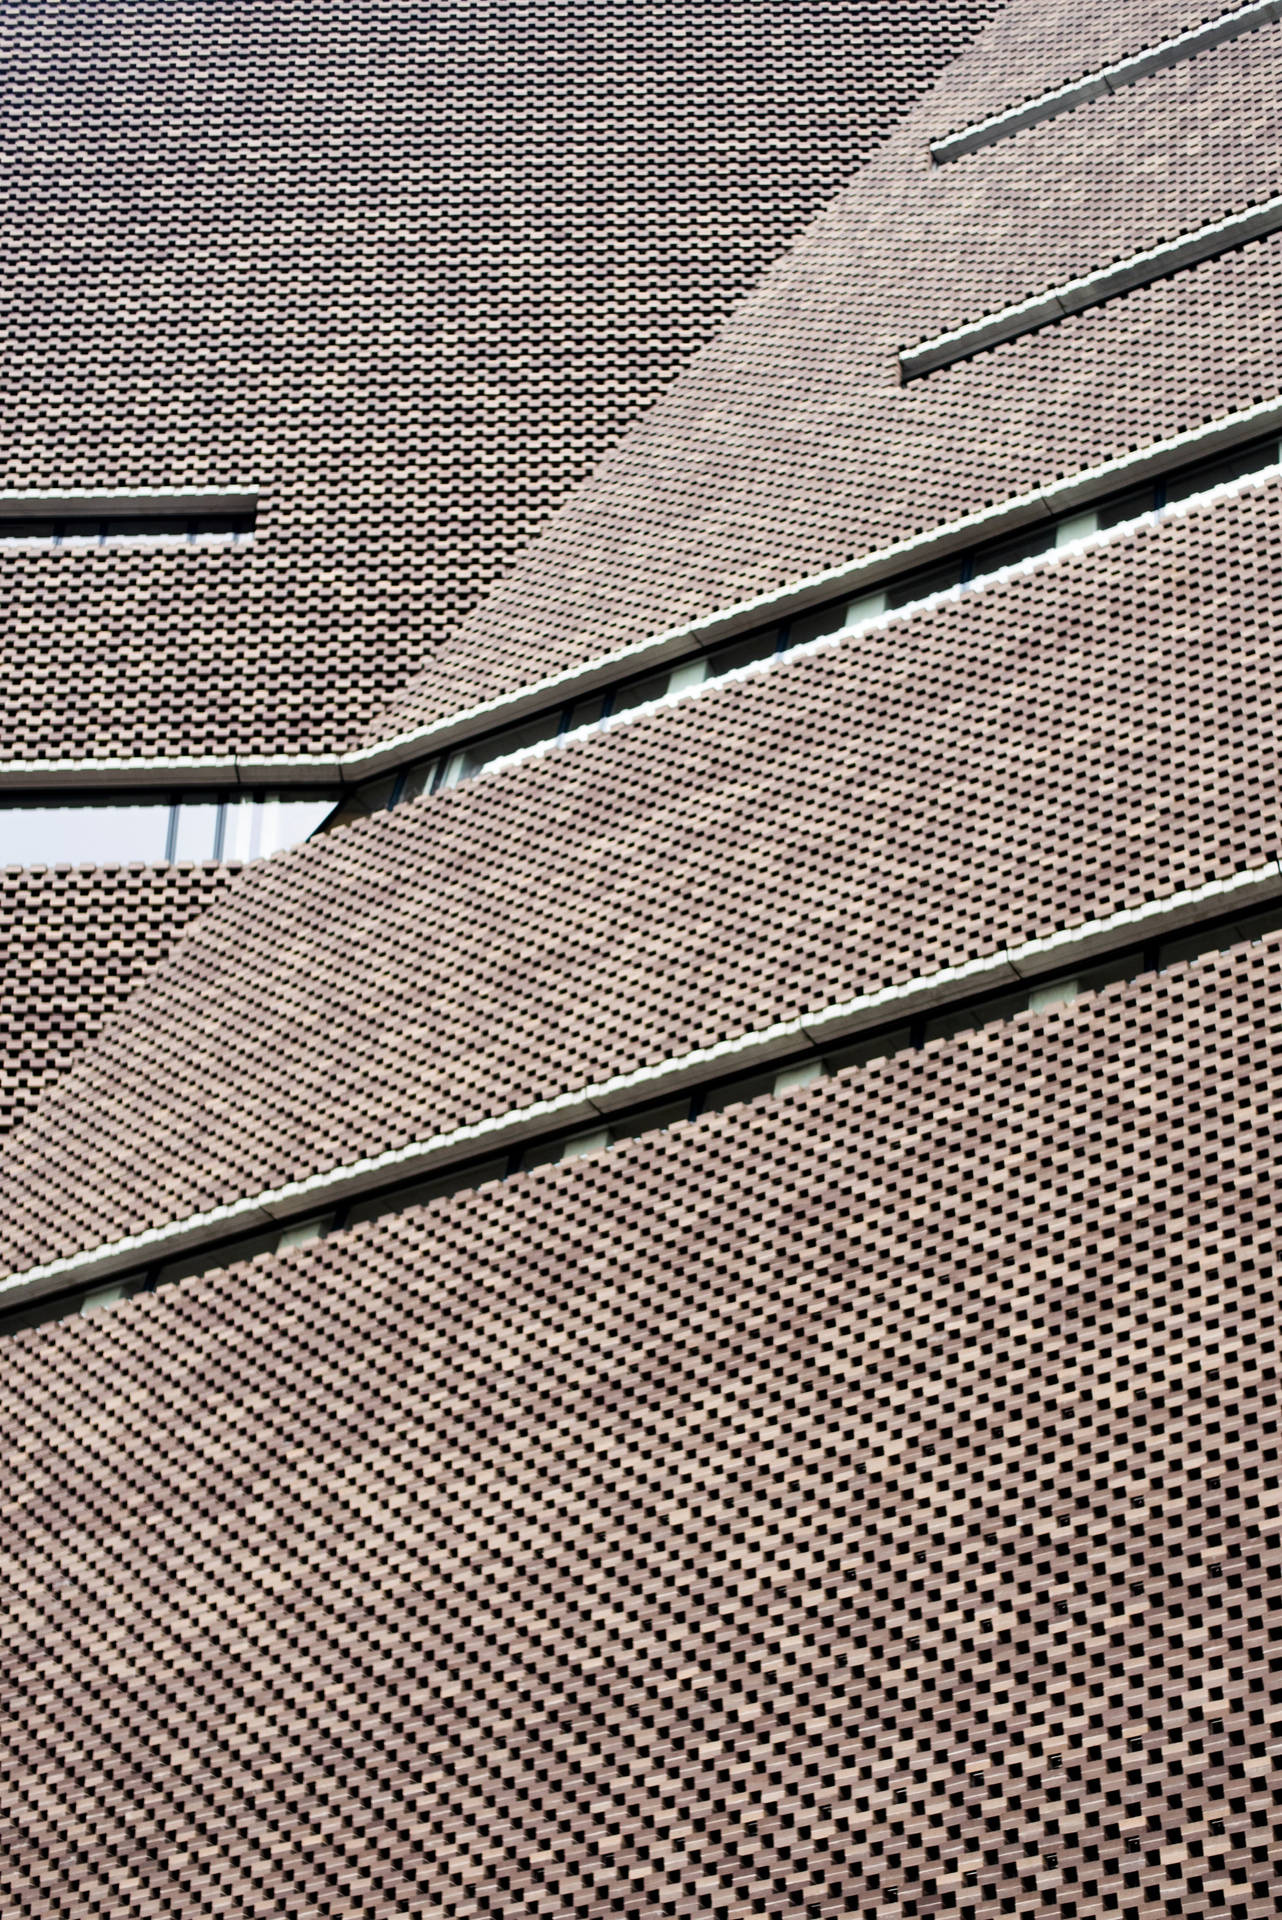 Tate Modern Exterior Design Picture